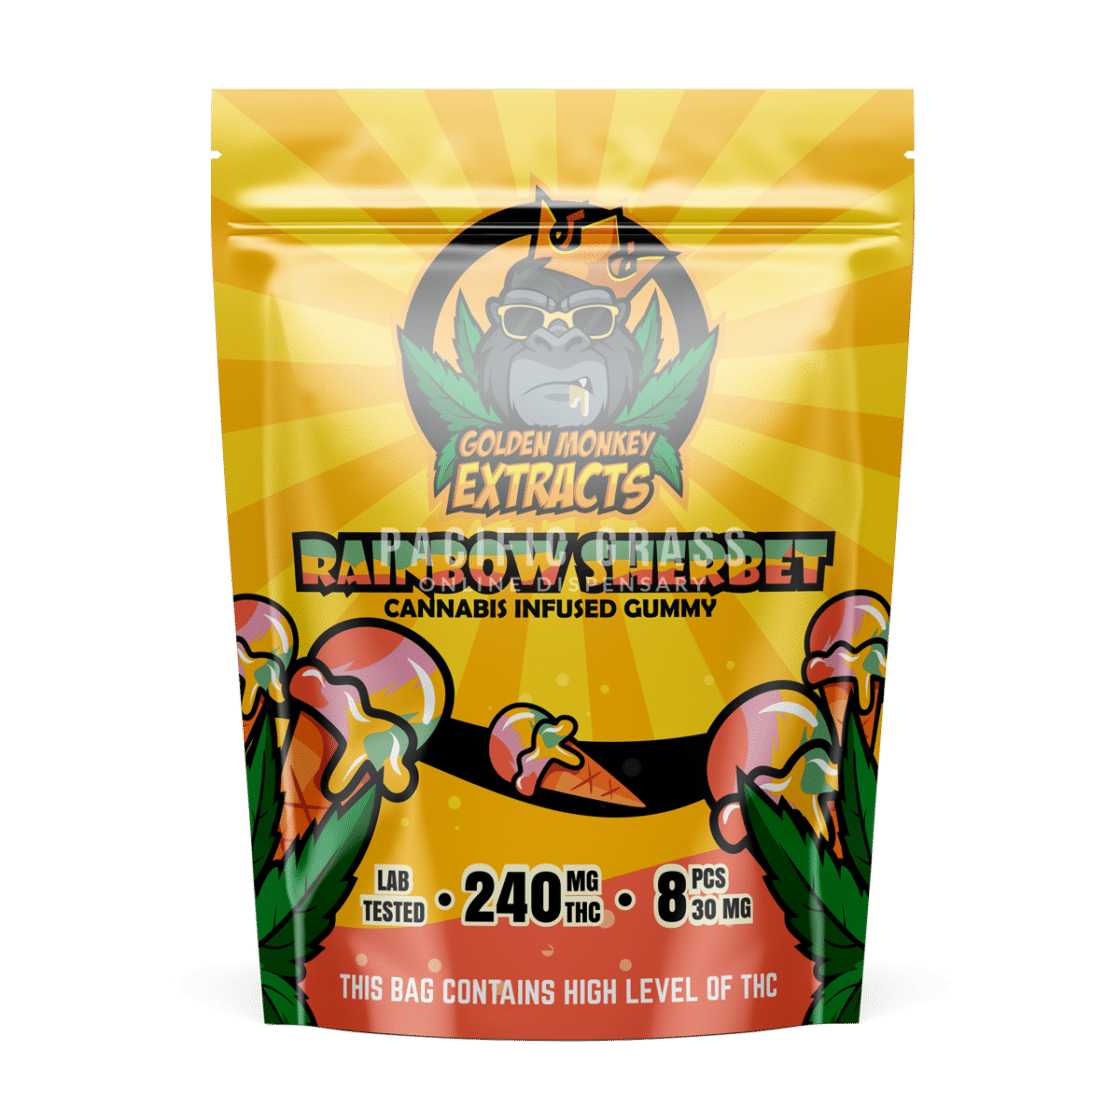 Golden Monkey Extracts – 240mg – Rainbow Sherbet